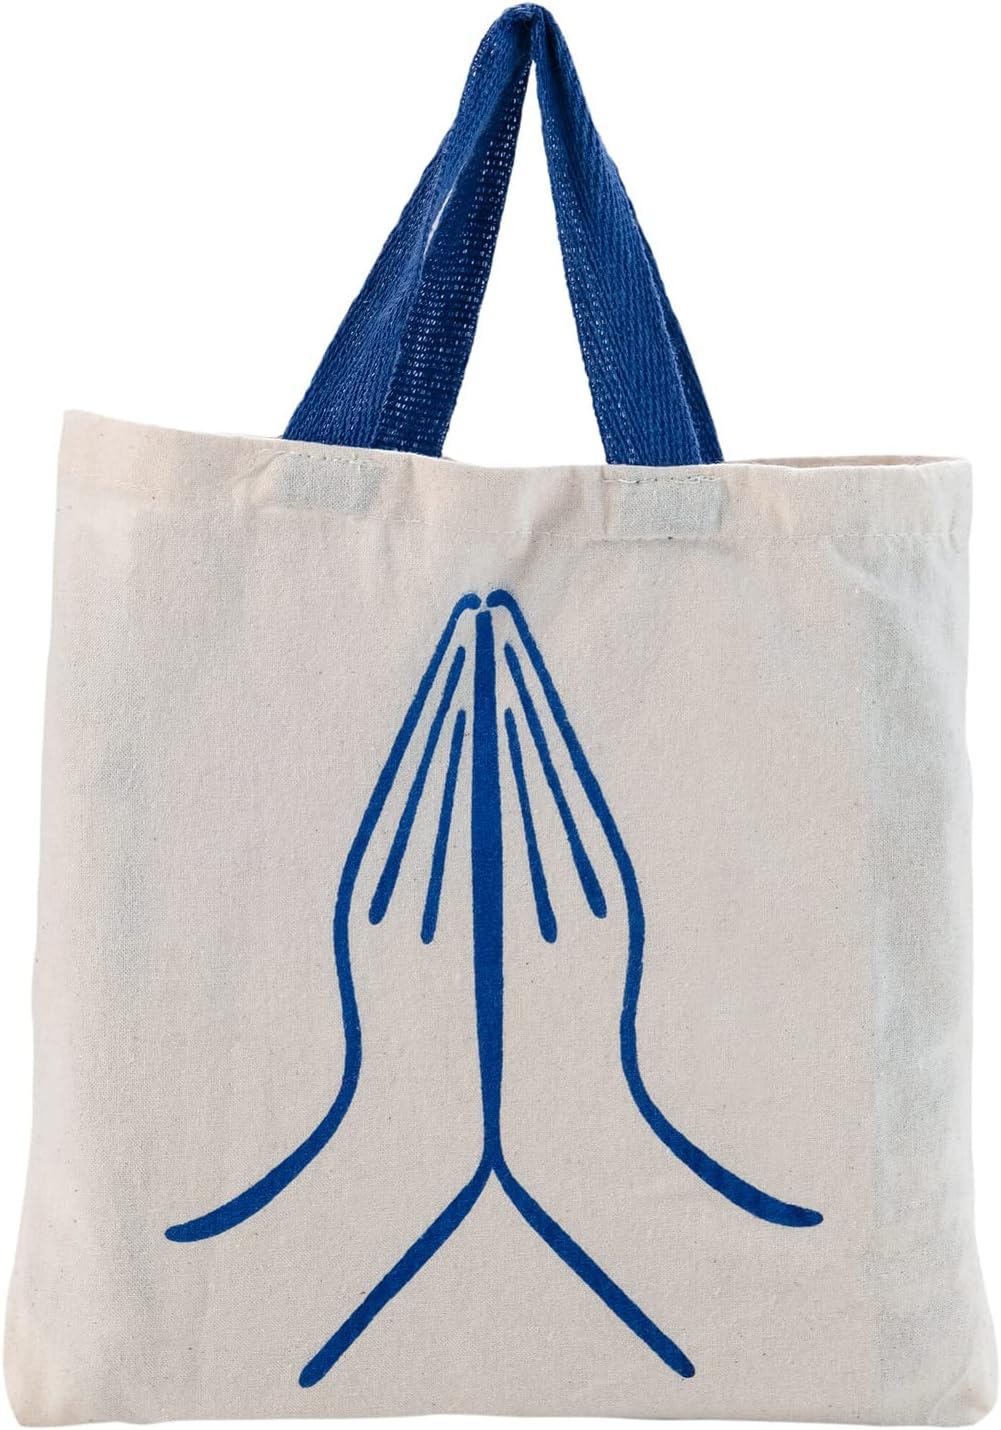 earthsave Namaste Bag (Bundle of 10) | Reusable Eco Friendly Cotton Bags